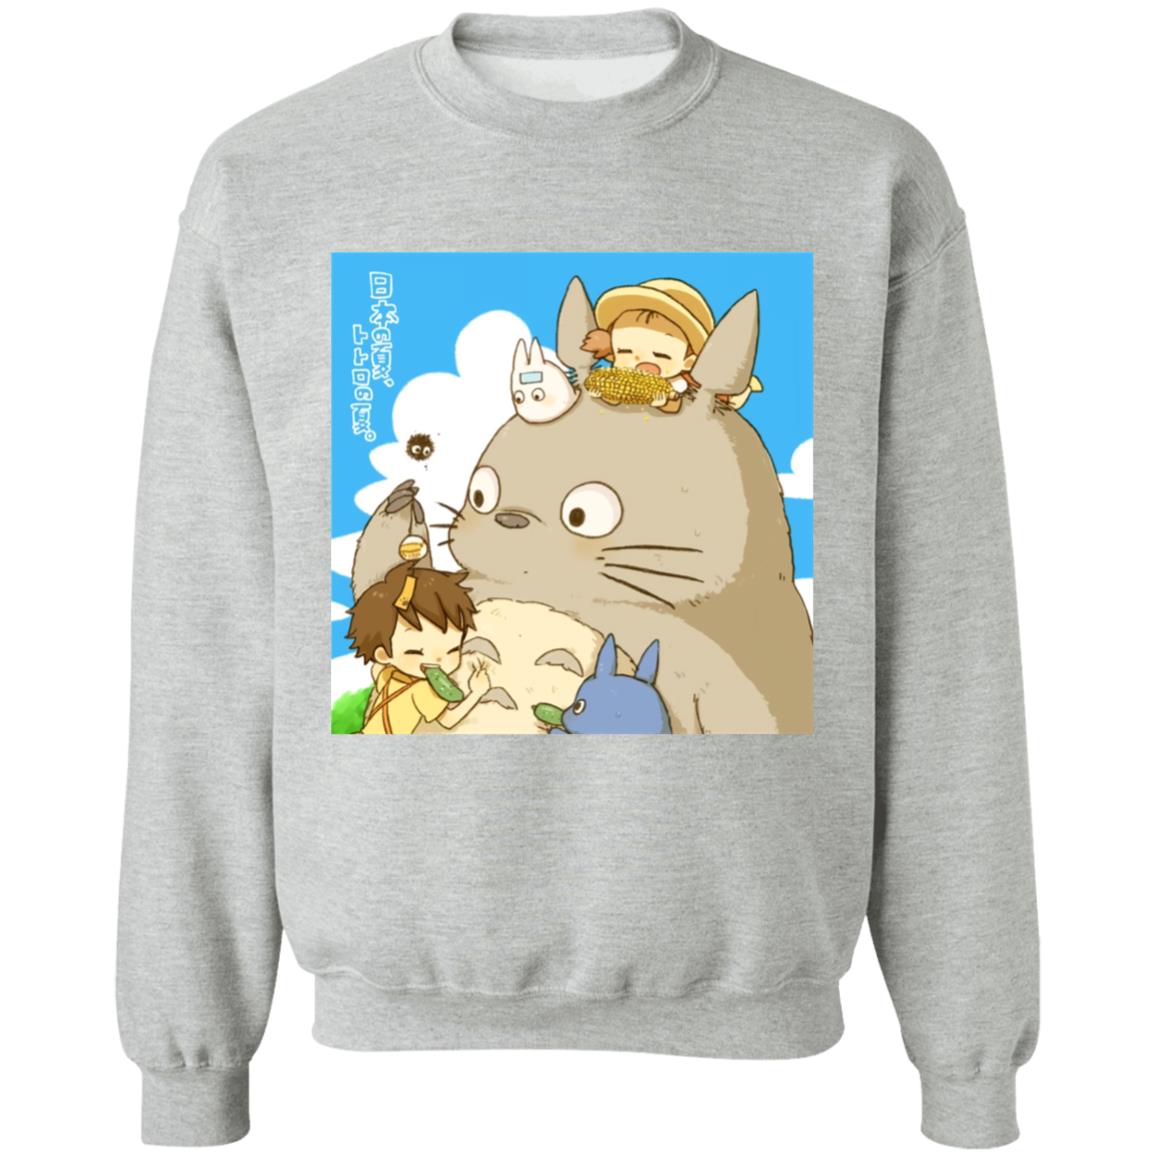 Totoro Family and Friends Sweatshirt